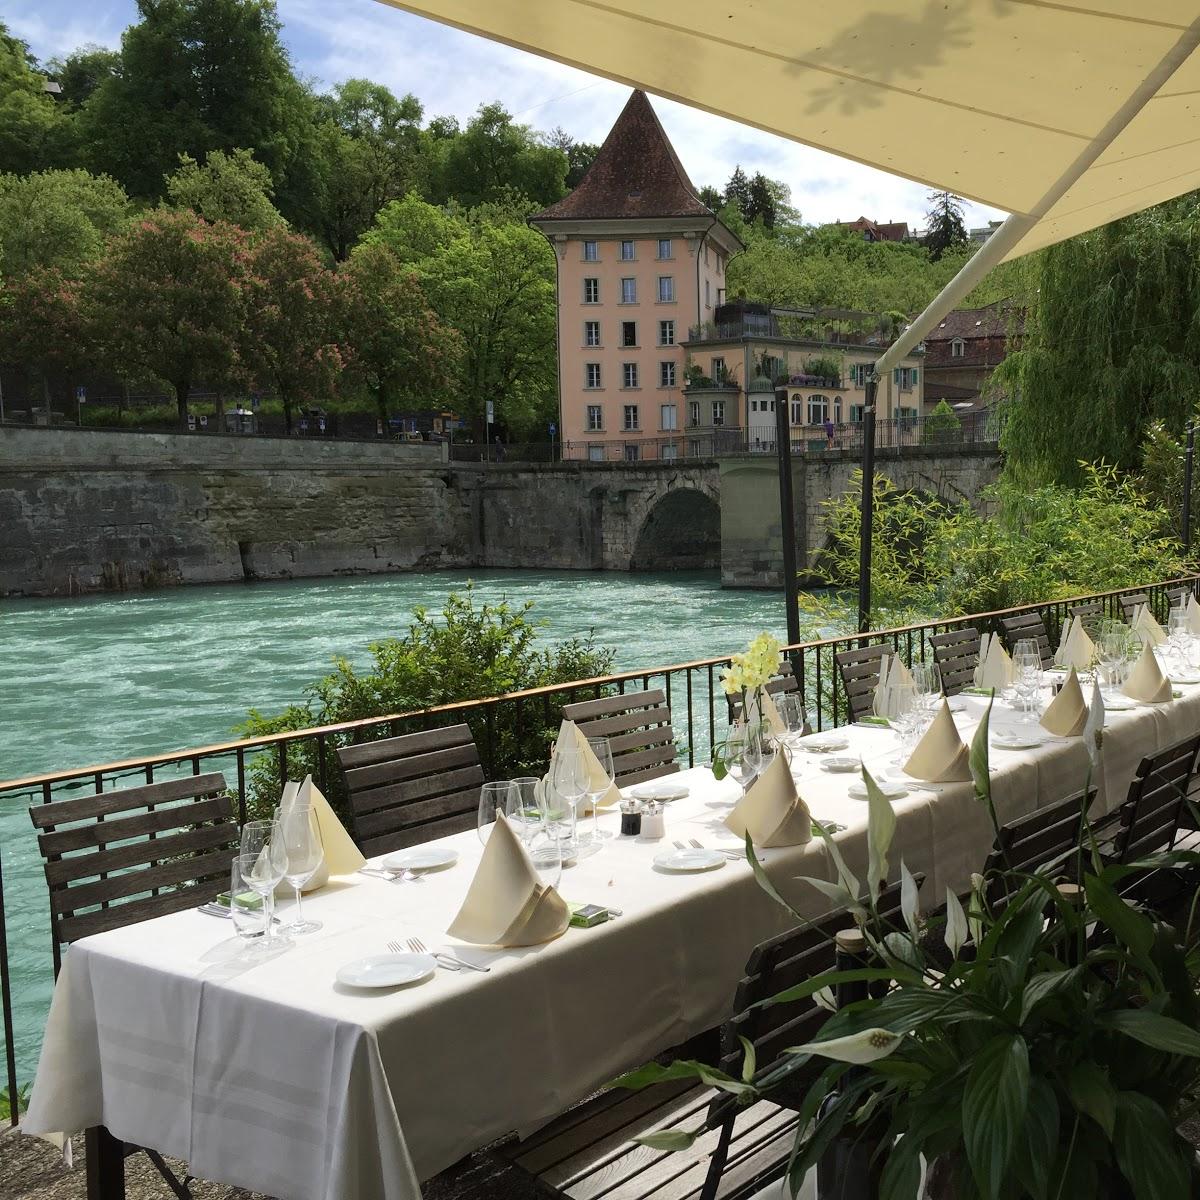 Restaurant "Casa Novo" in Bern